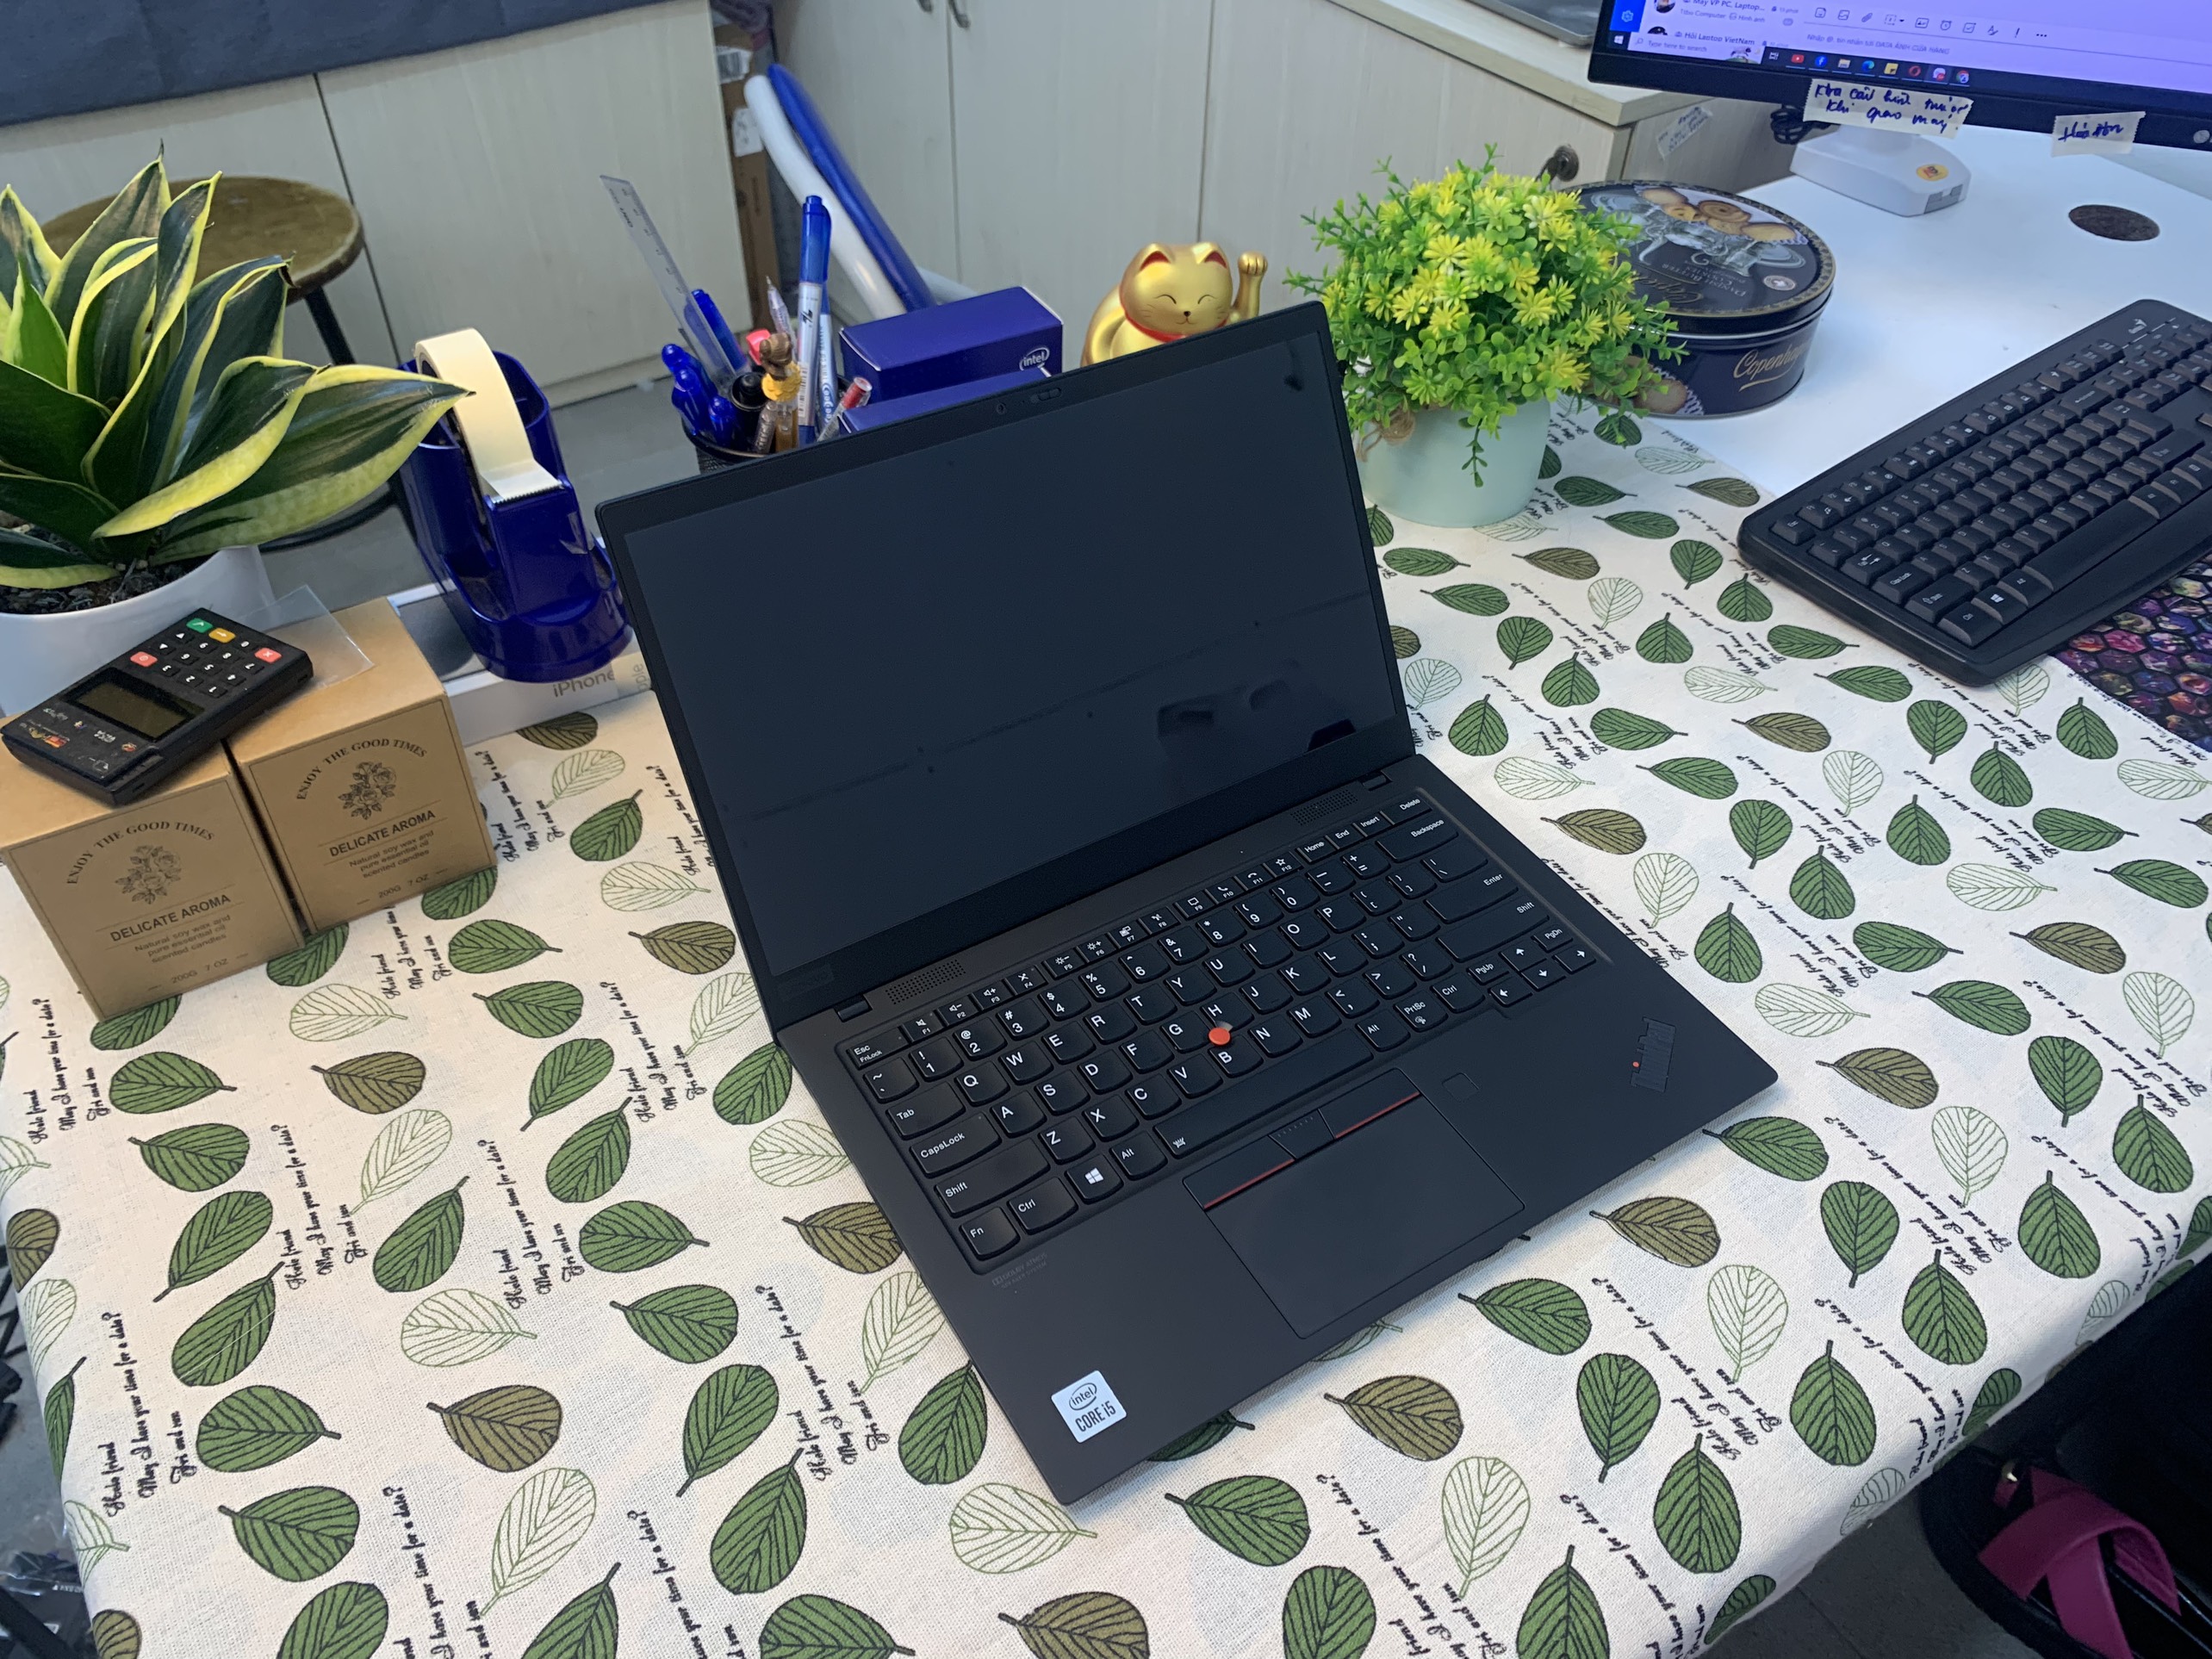 ThinkPad X1 Cacbon gen 8